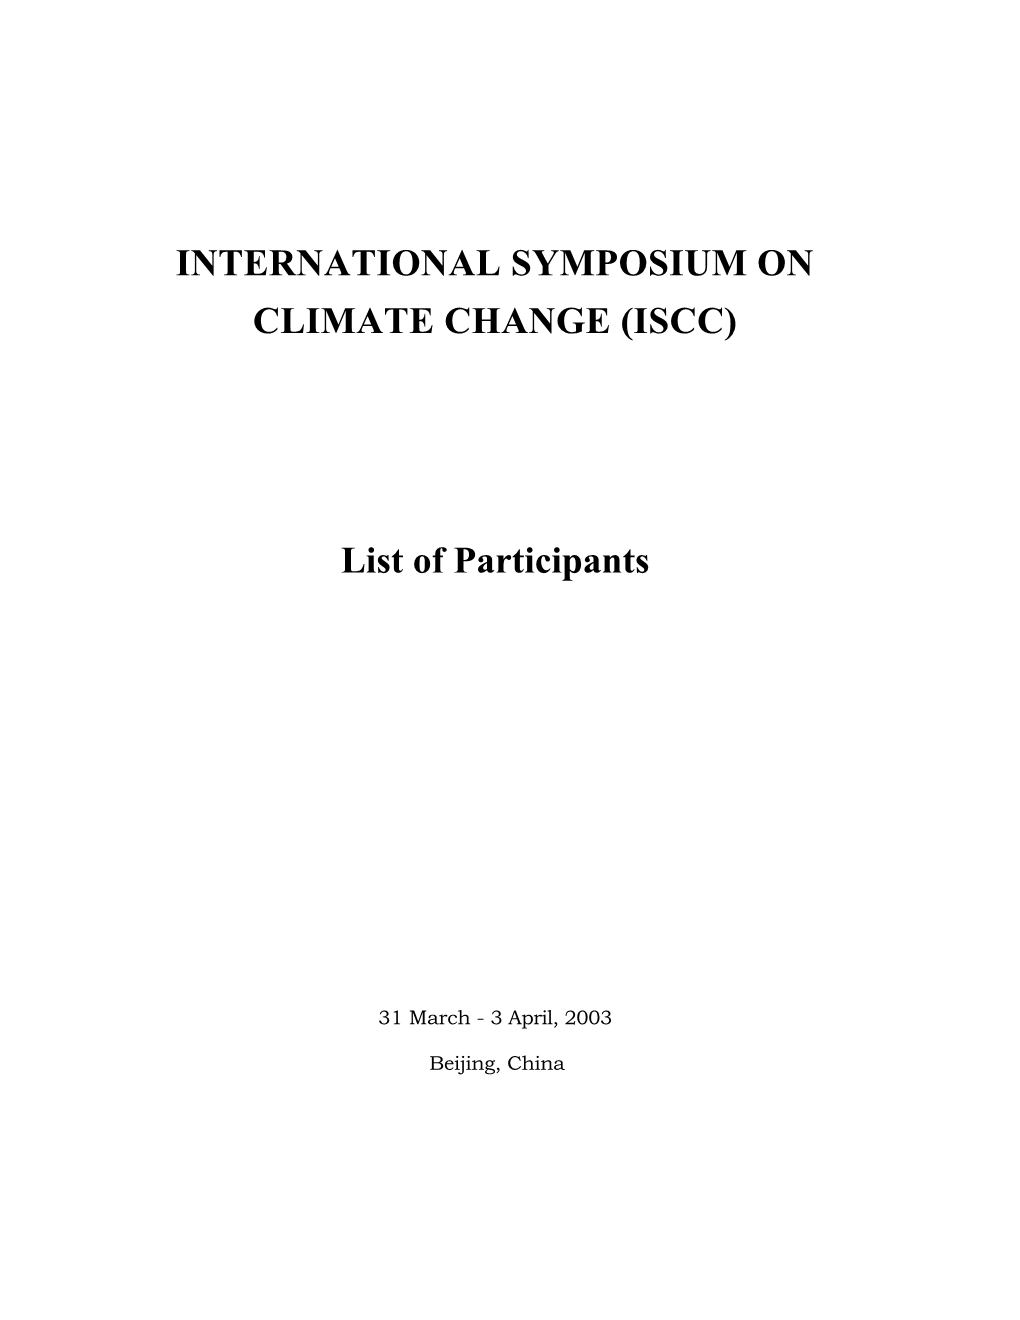 INTERNATIONAL SYMPOSIUM on CLIMATE CHANGE (ISCC) List